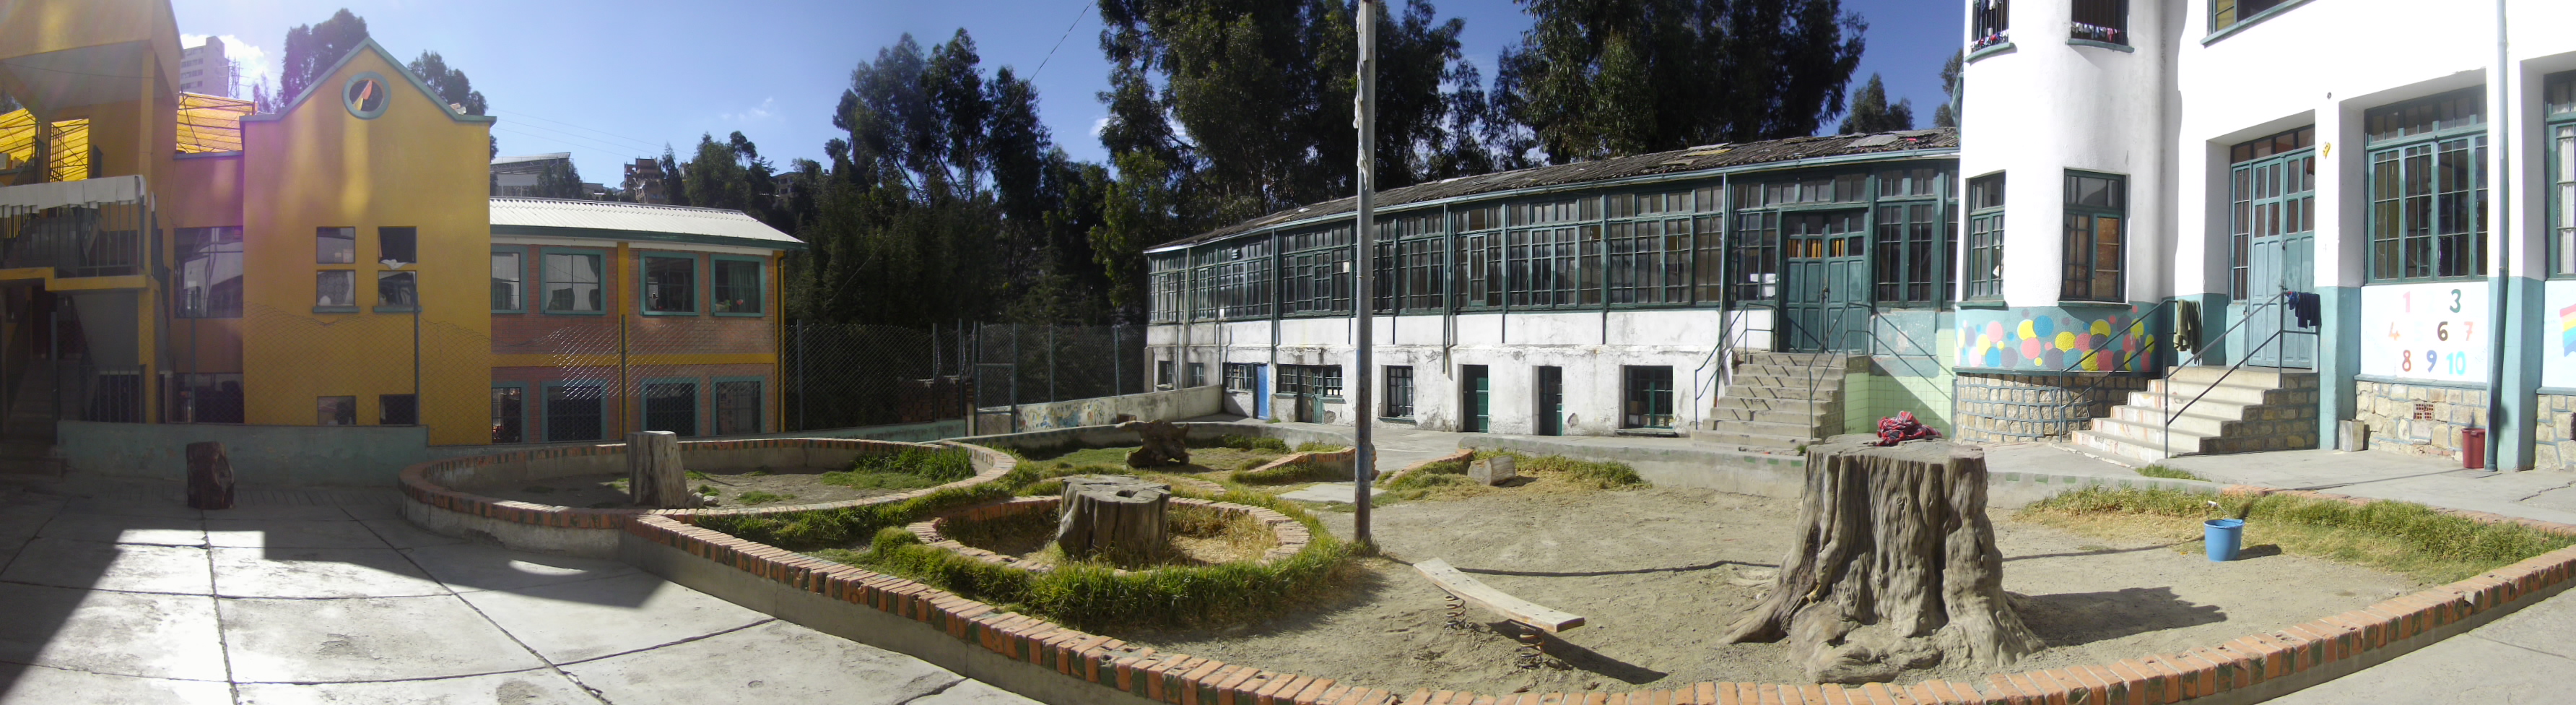 The Garden Project at Jose Soria orphanage, La Paz